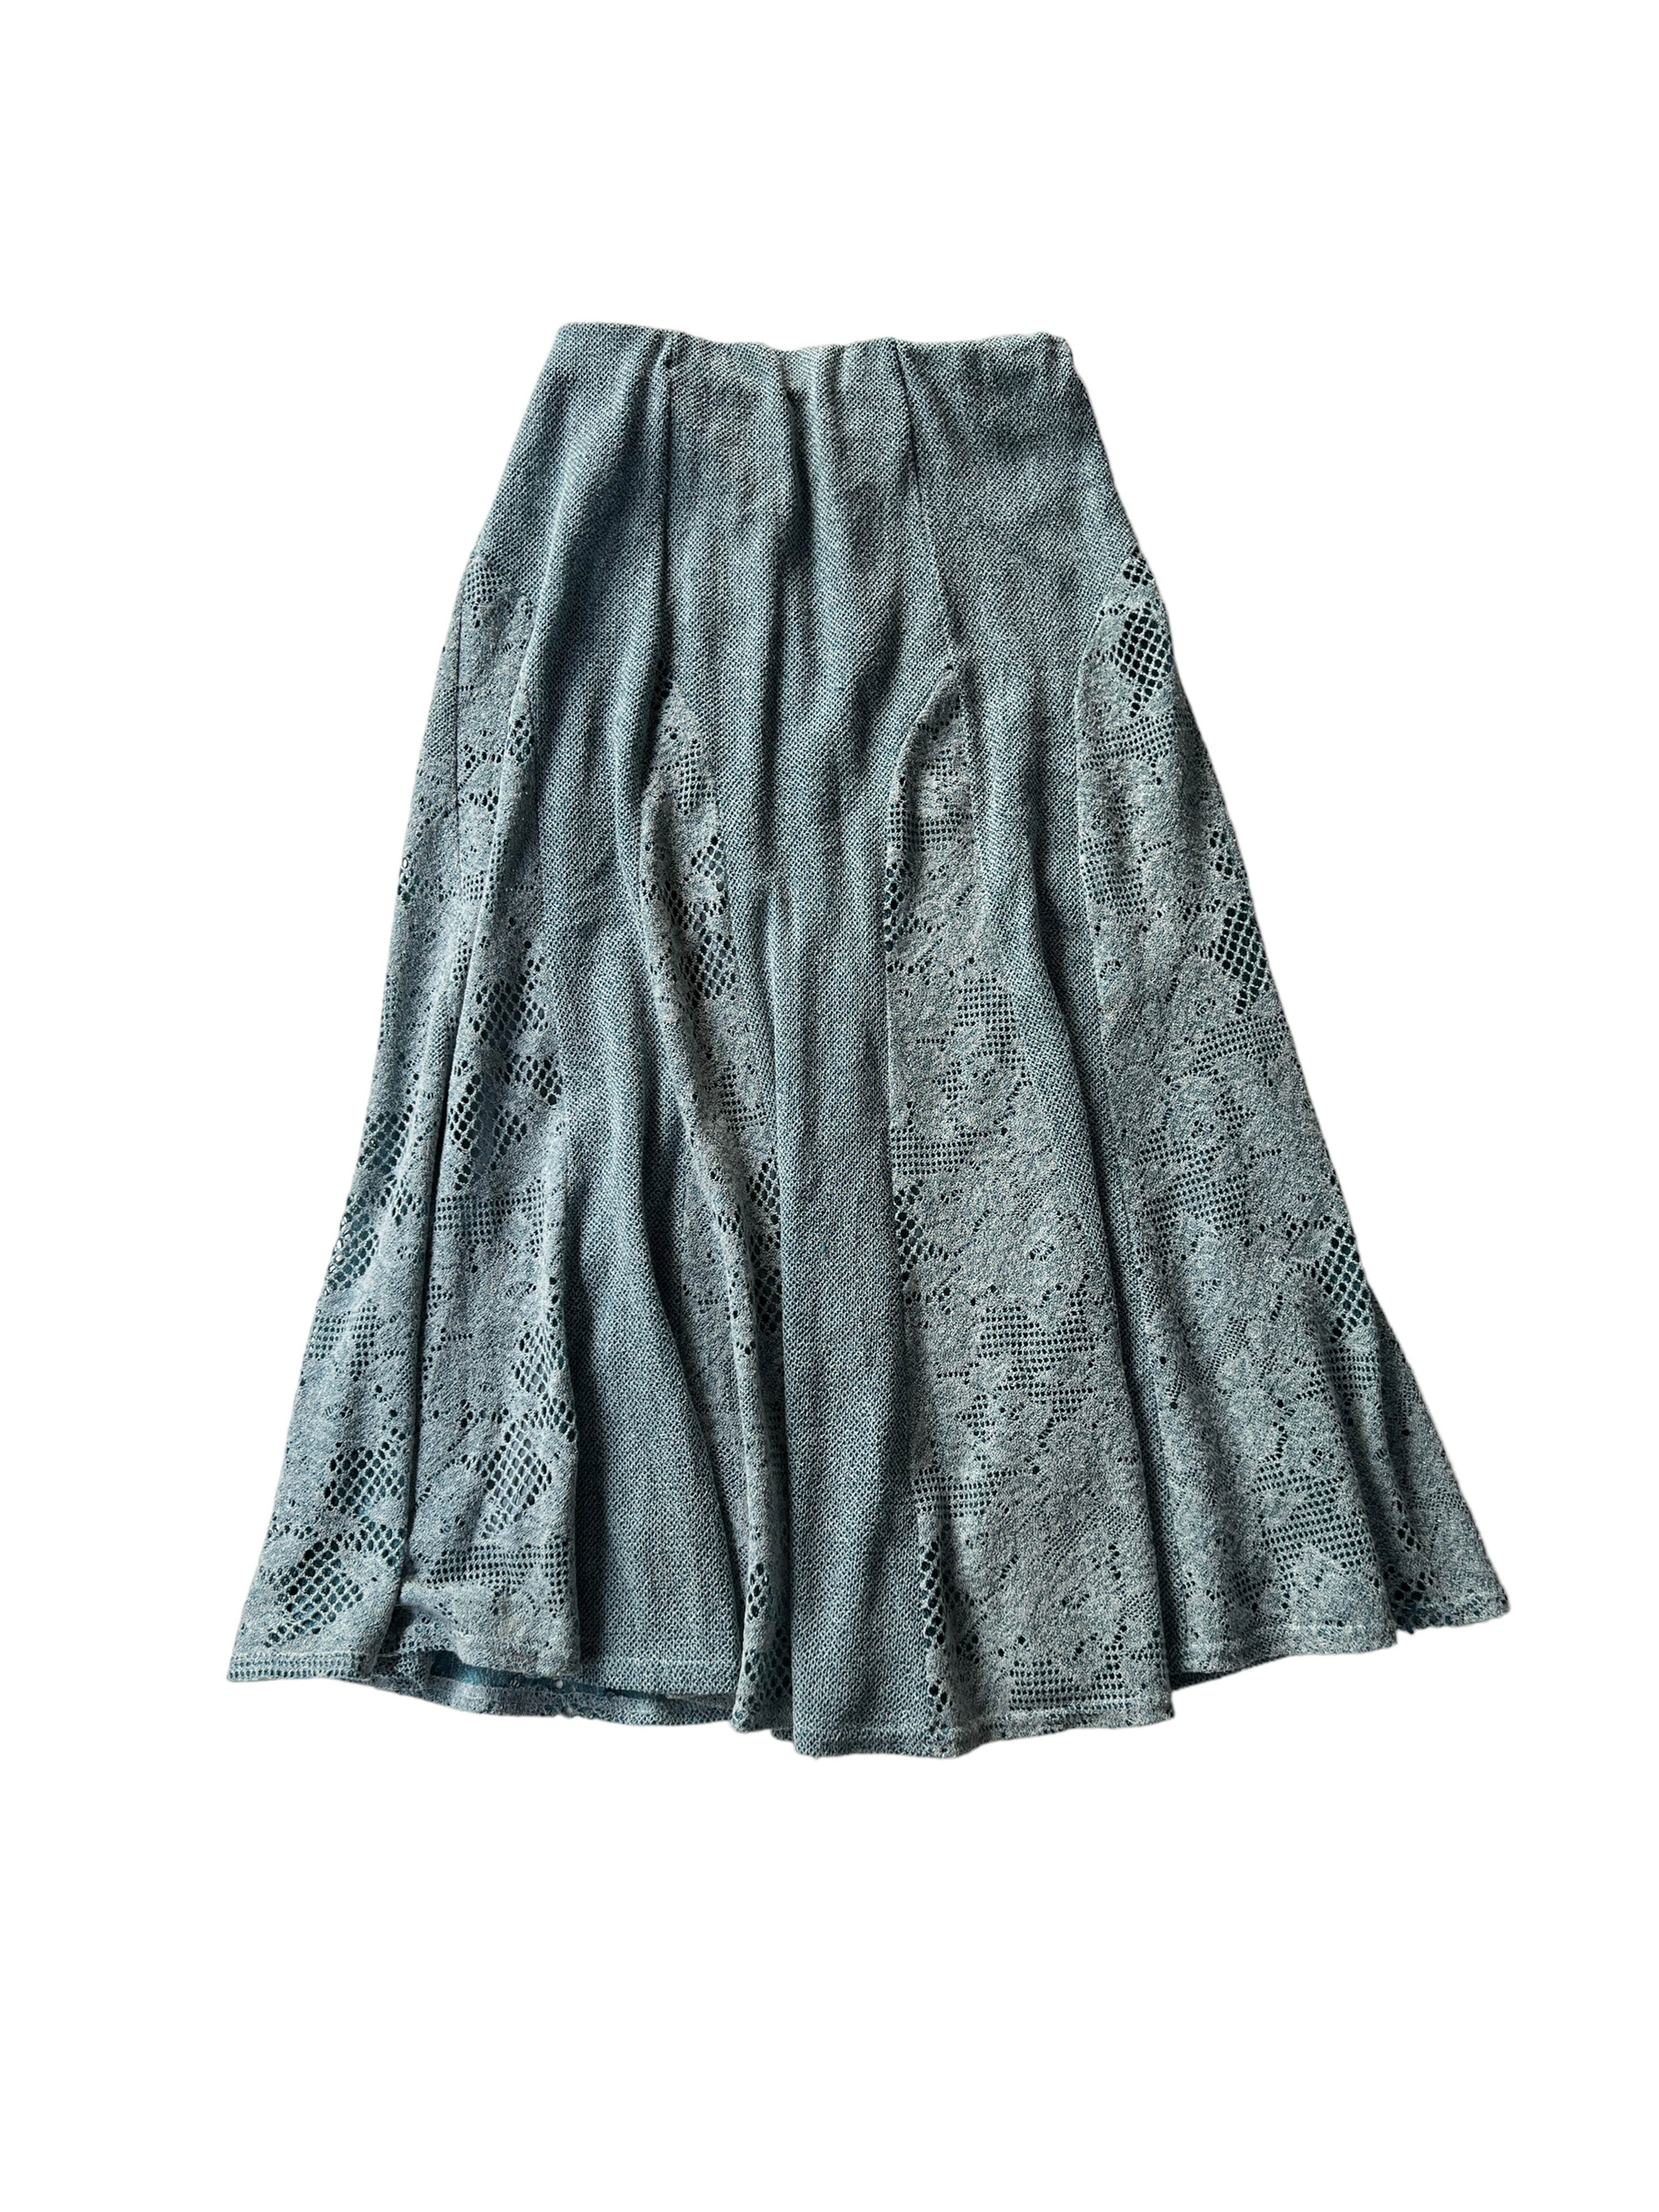 vintage pattern skirts